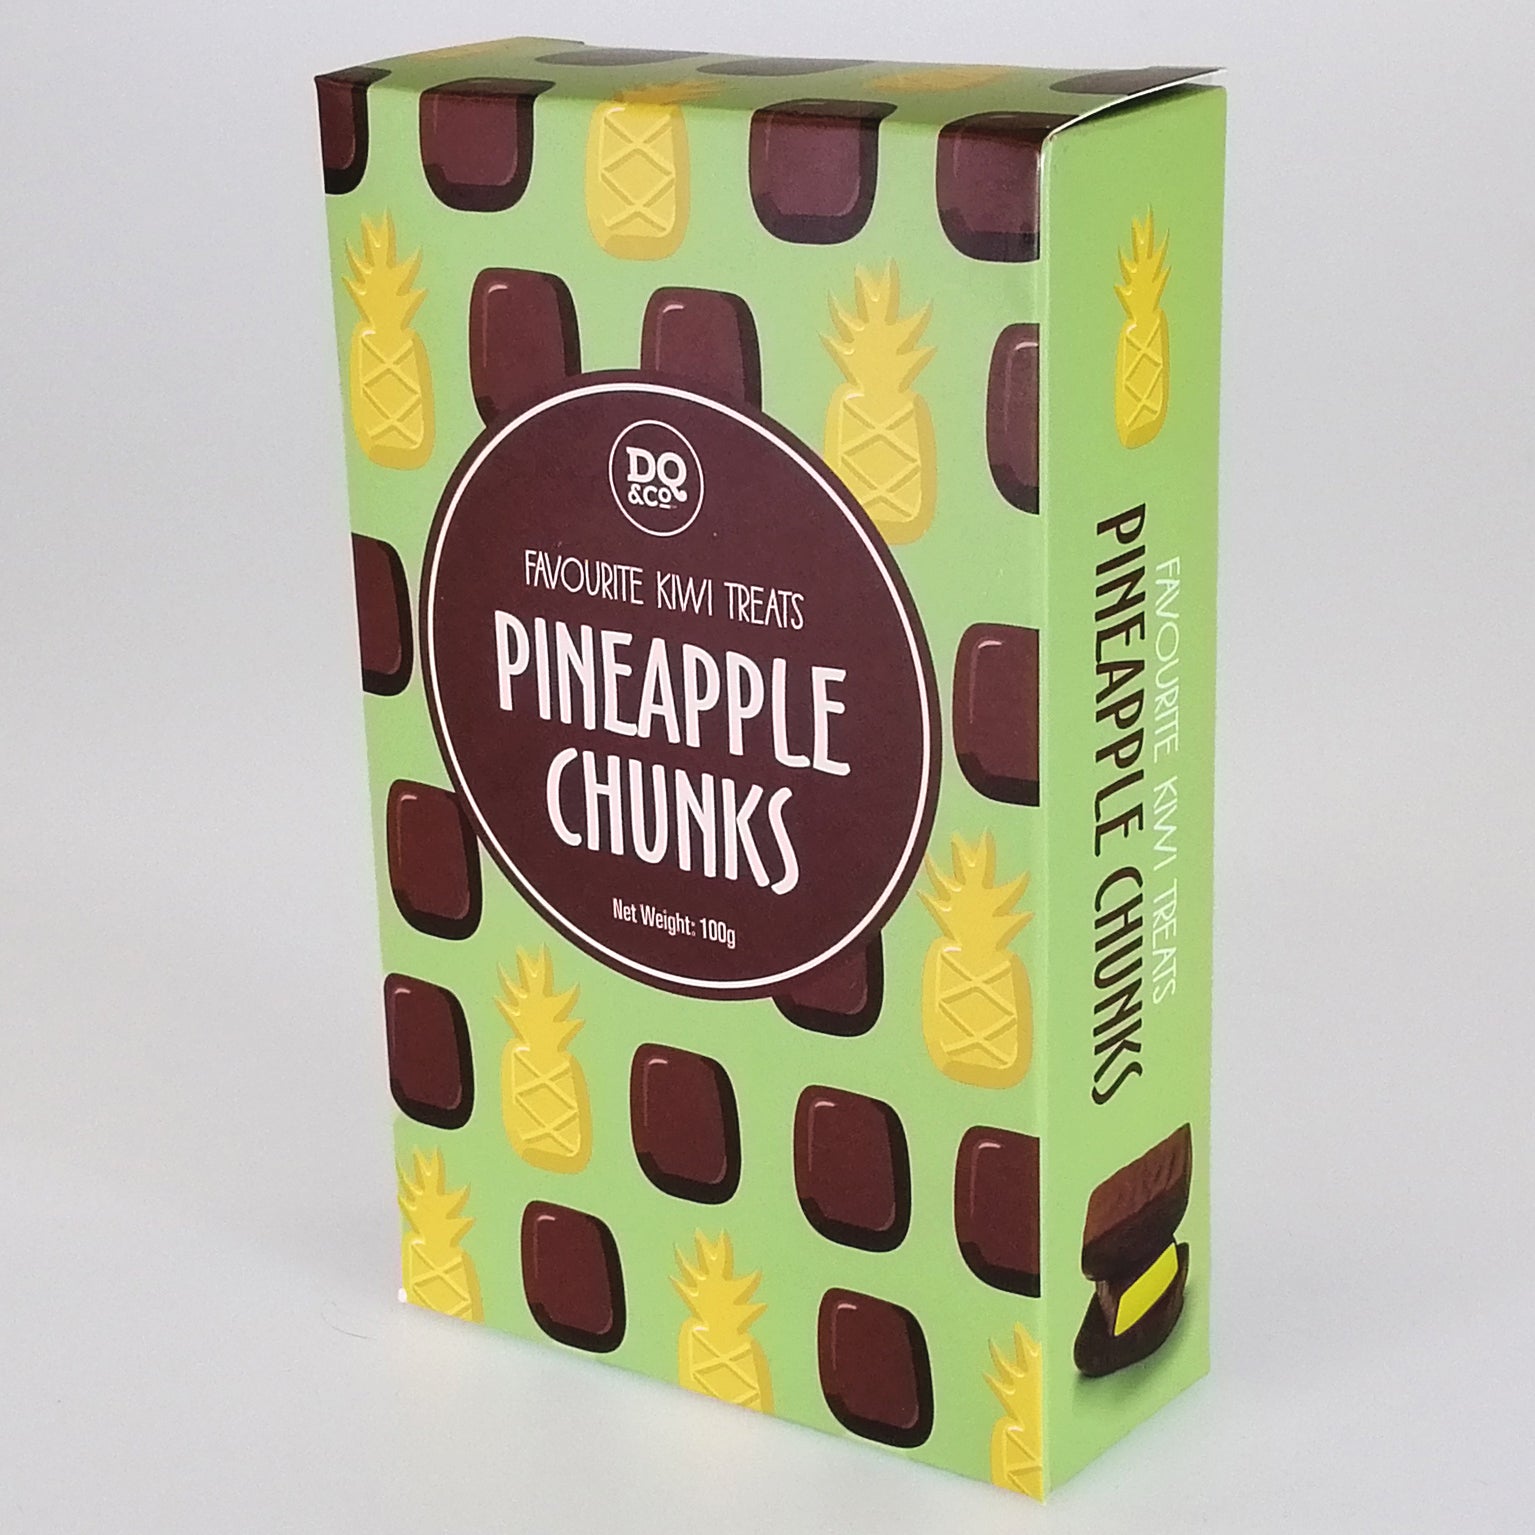 Boxed Pineapple Chunks 100g